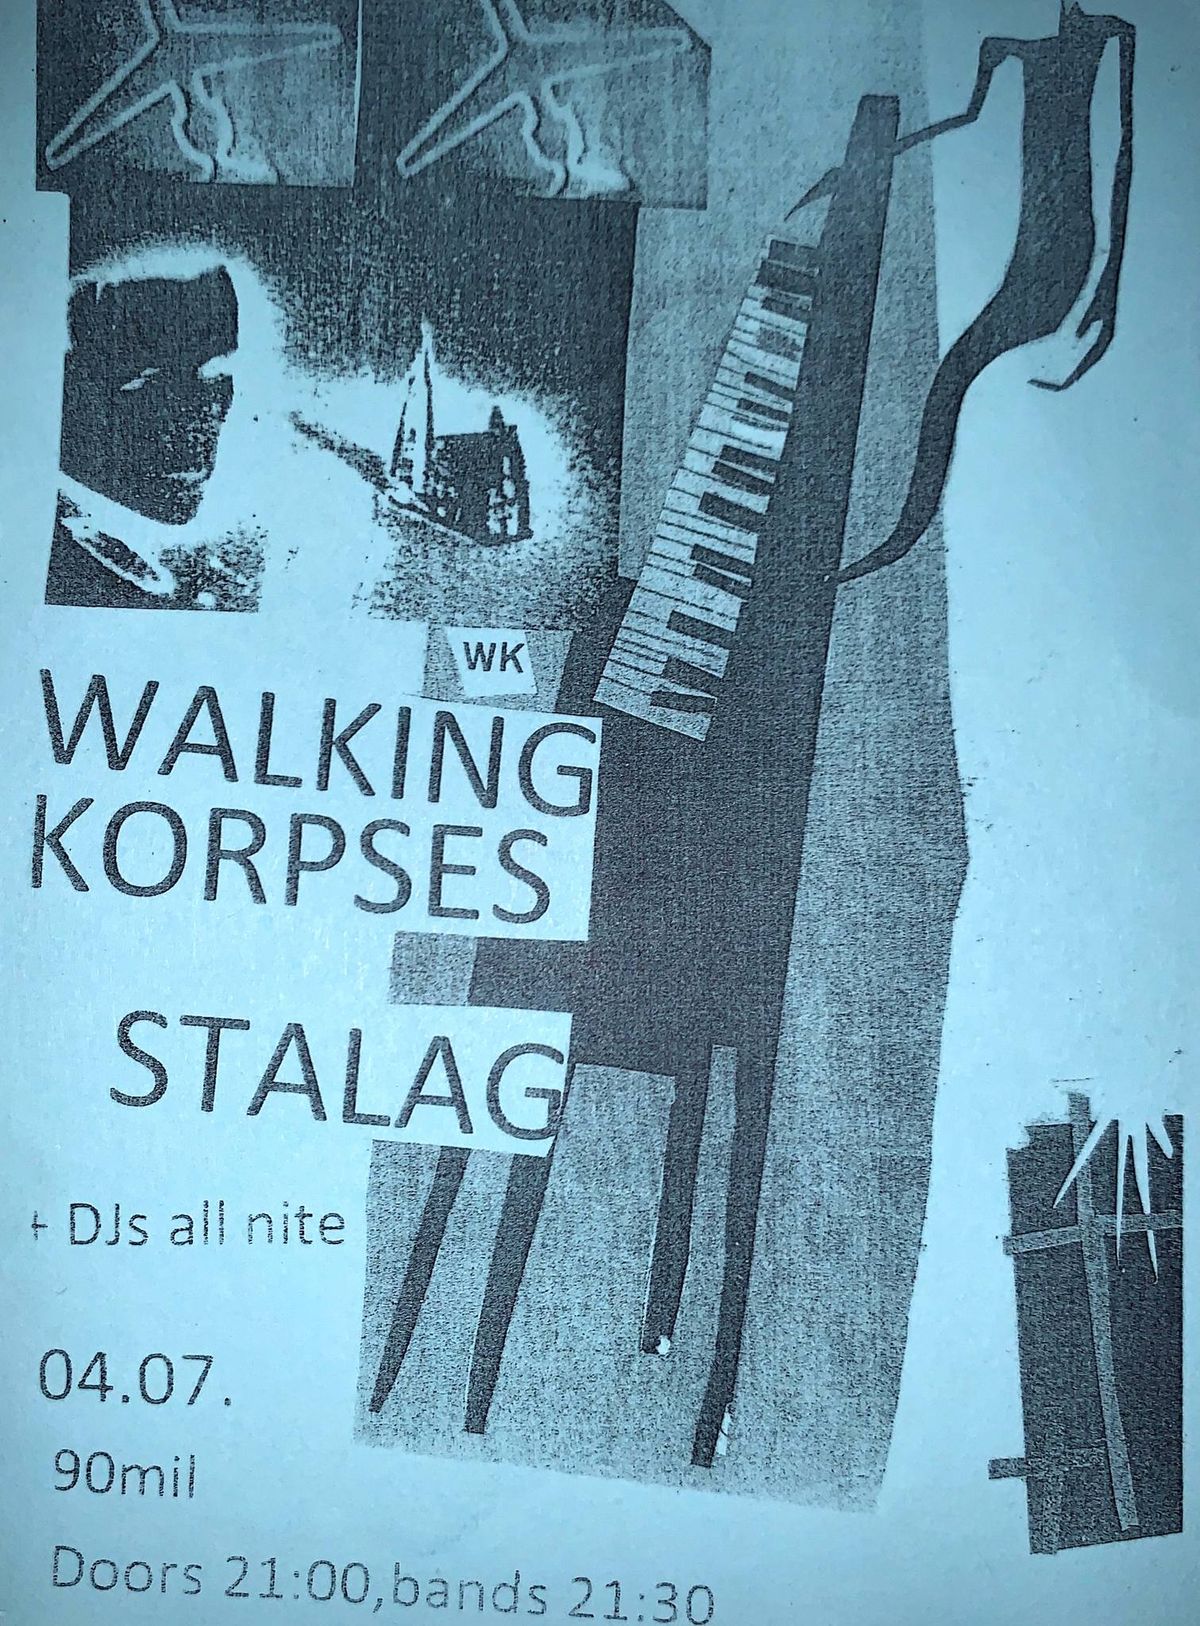 The Walking Korpses & Stalag